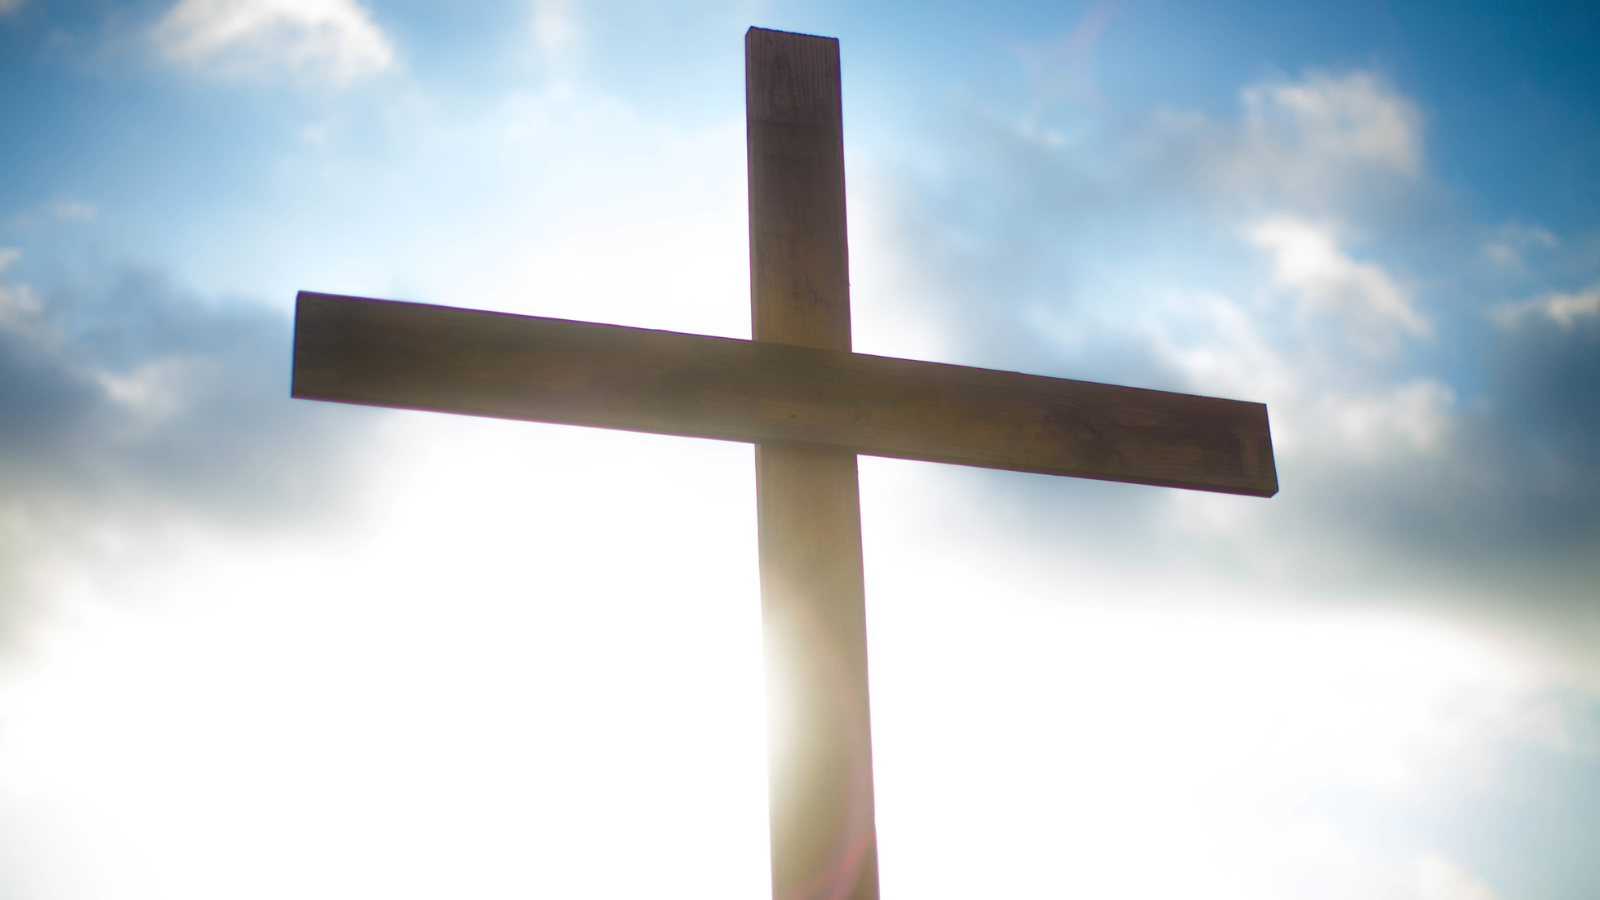 A wooden cross against a blue sky.